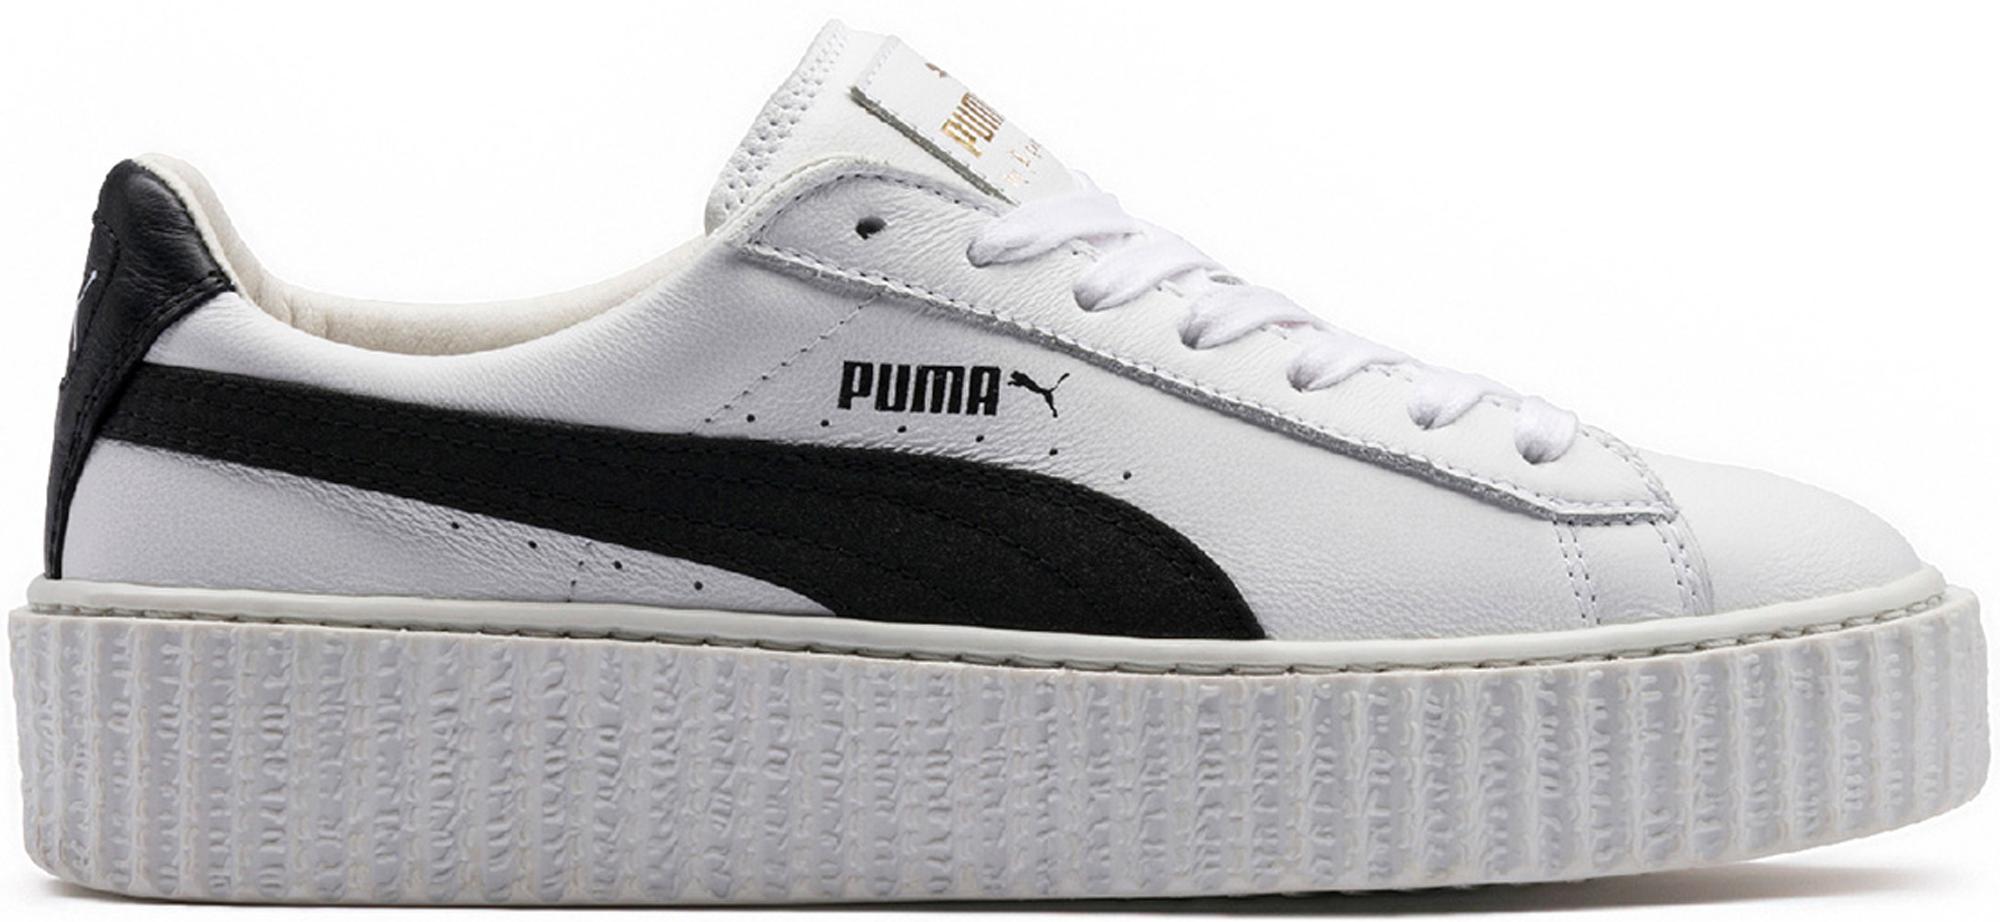 Rihanna x Puma Creeper Fenty Leather White Black